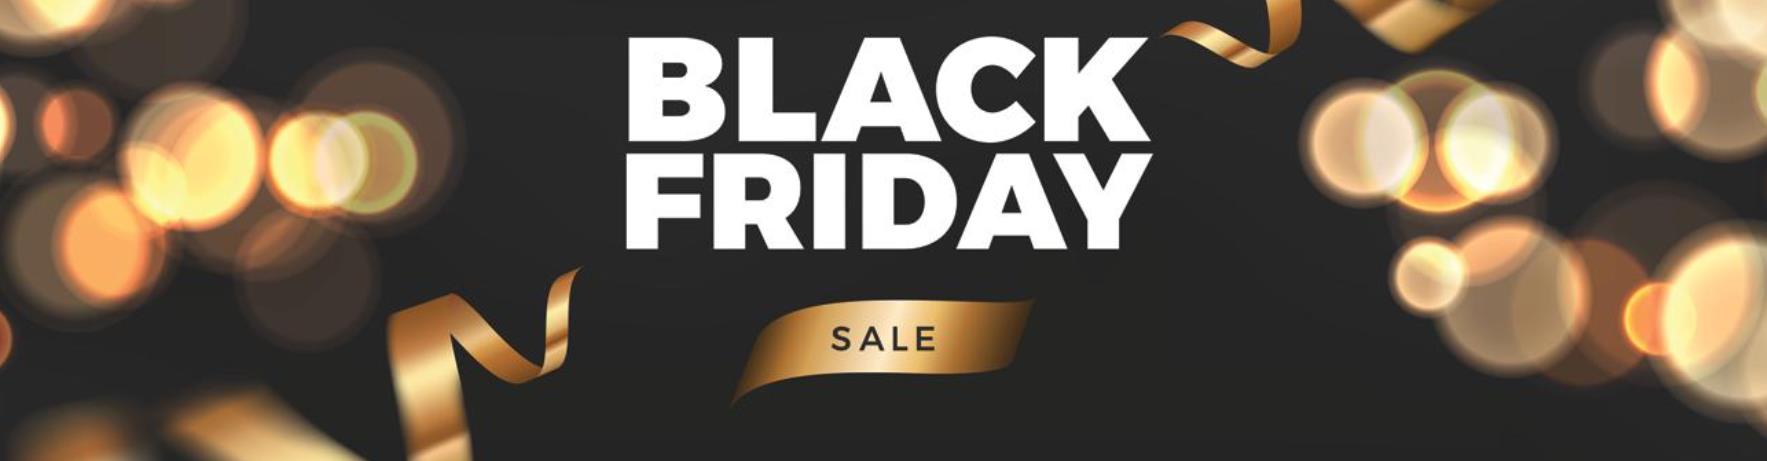 Black Friday Deals Sale